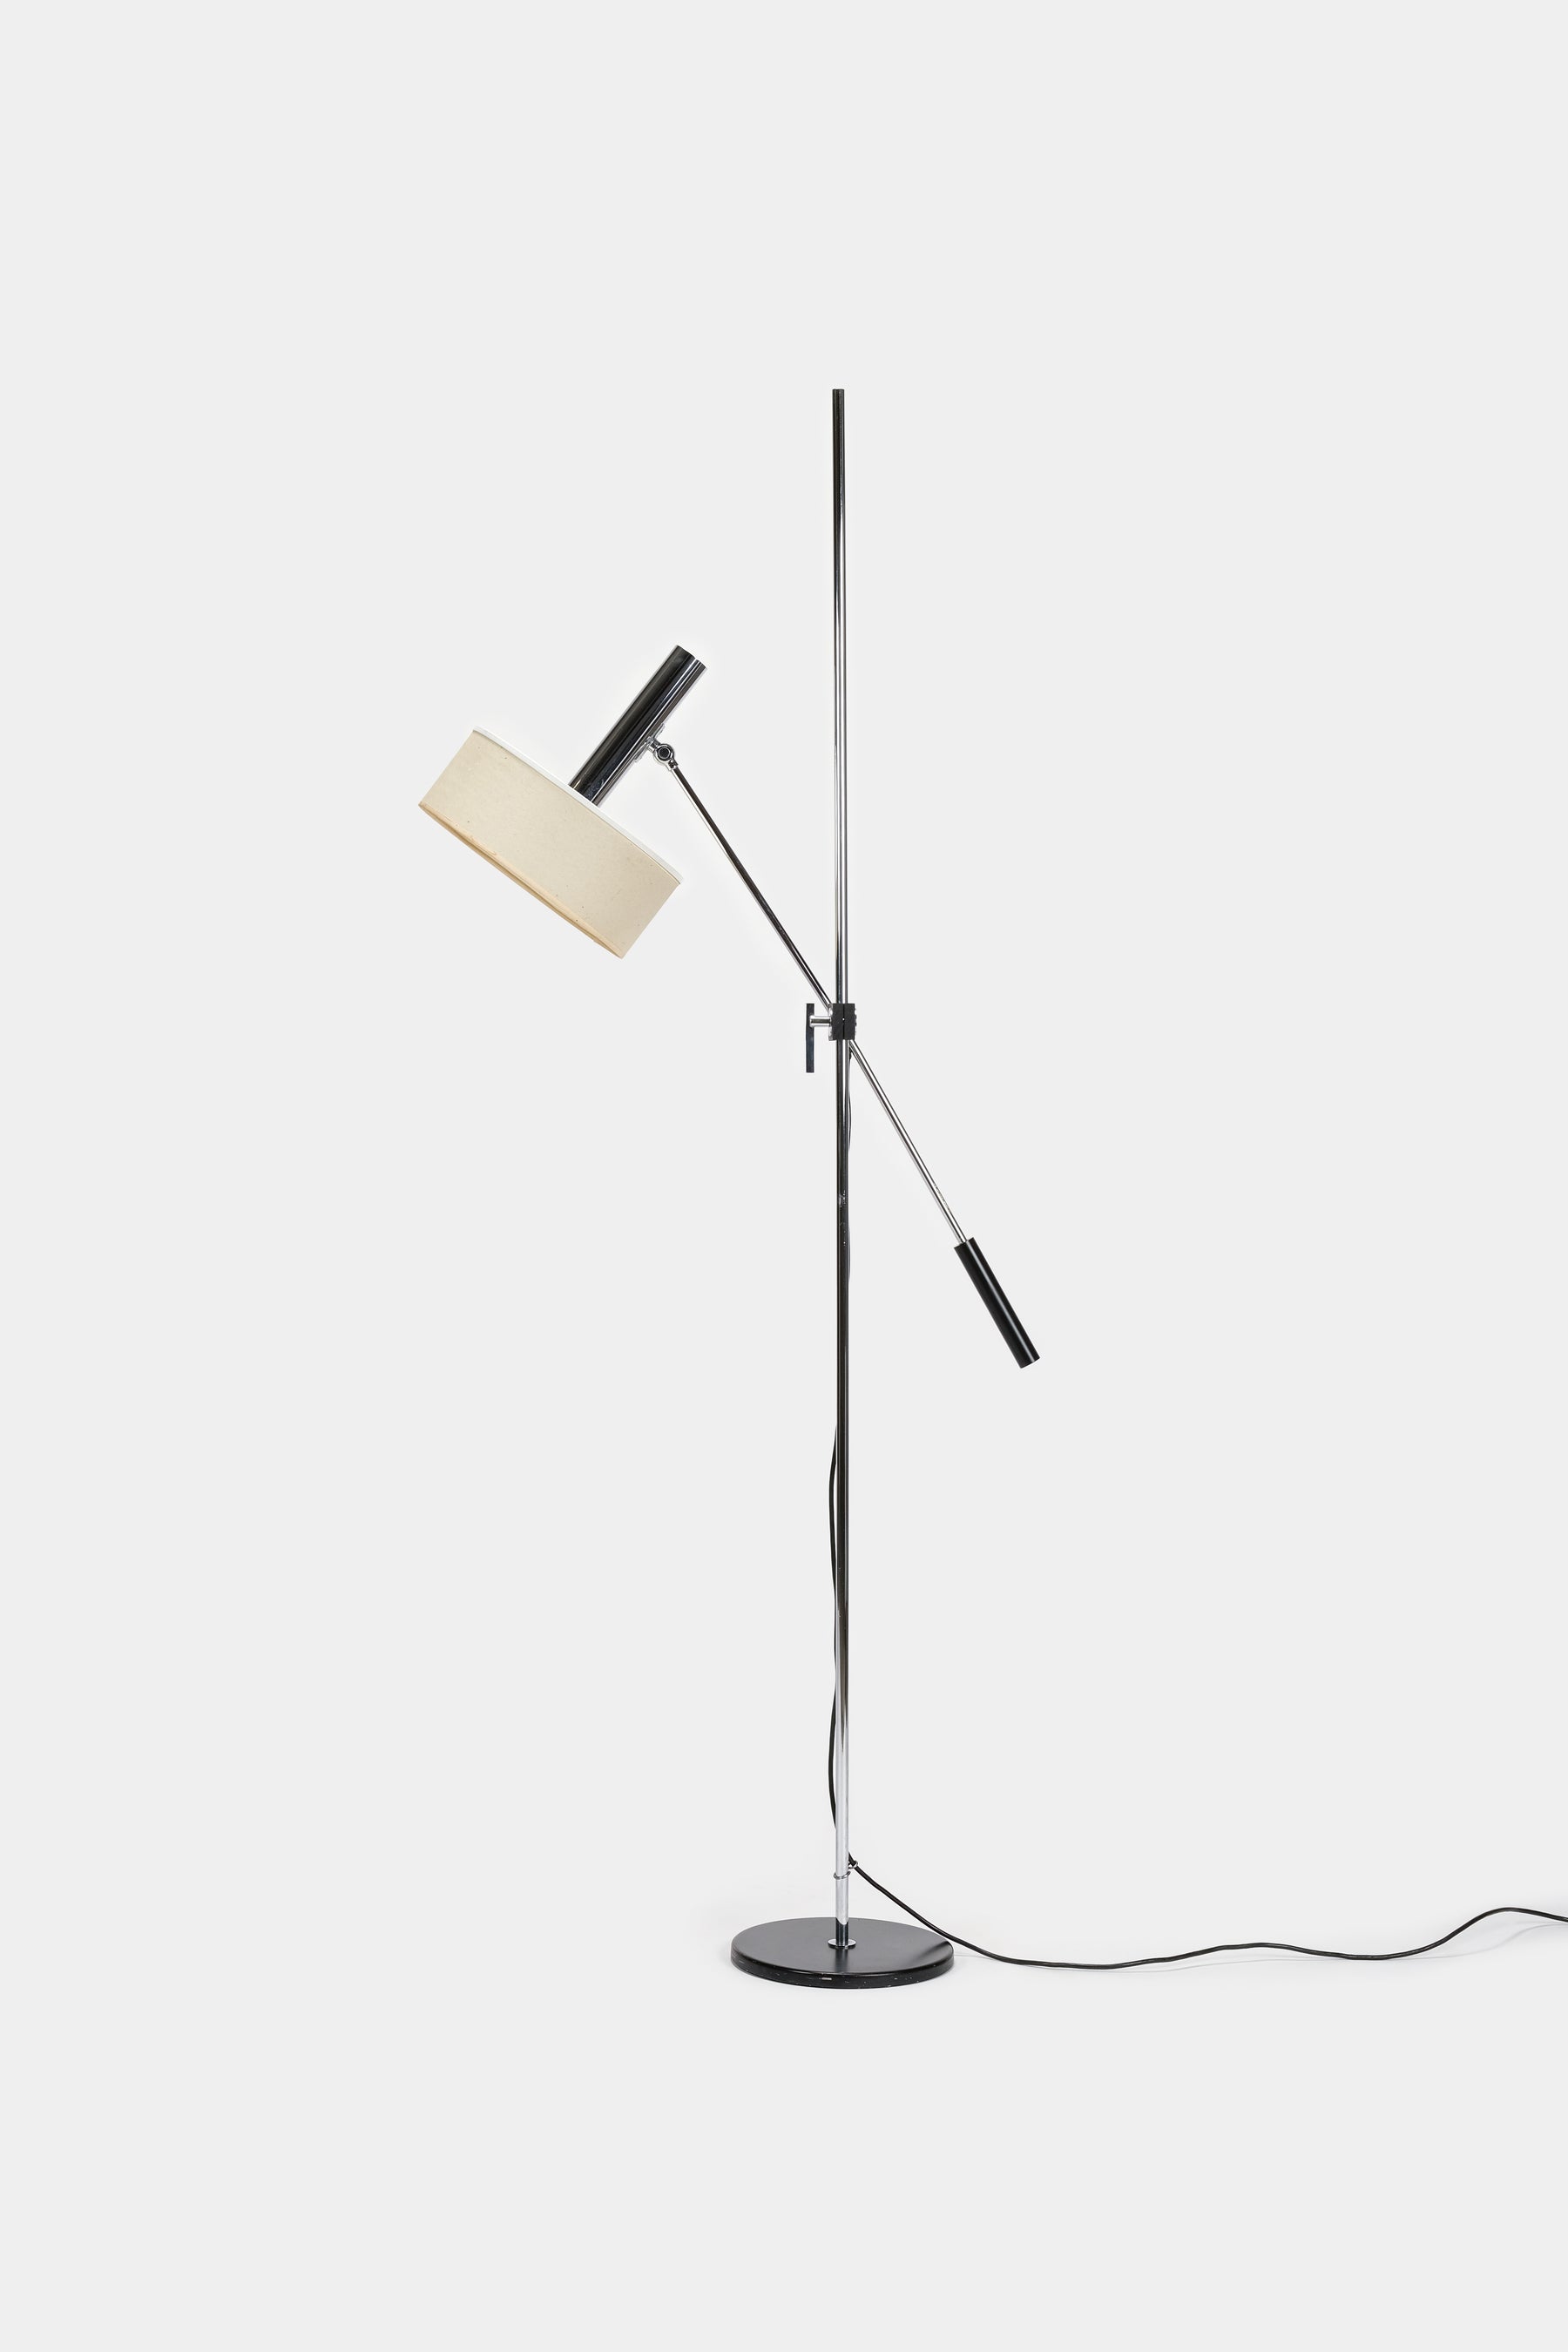 Stehlampe, Verstellbar, Swisslamp International, 50er